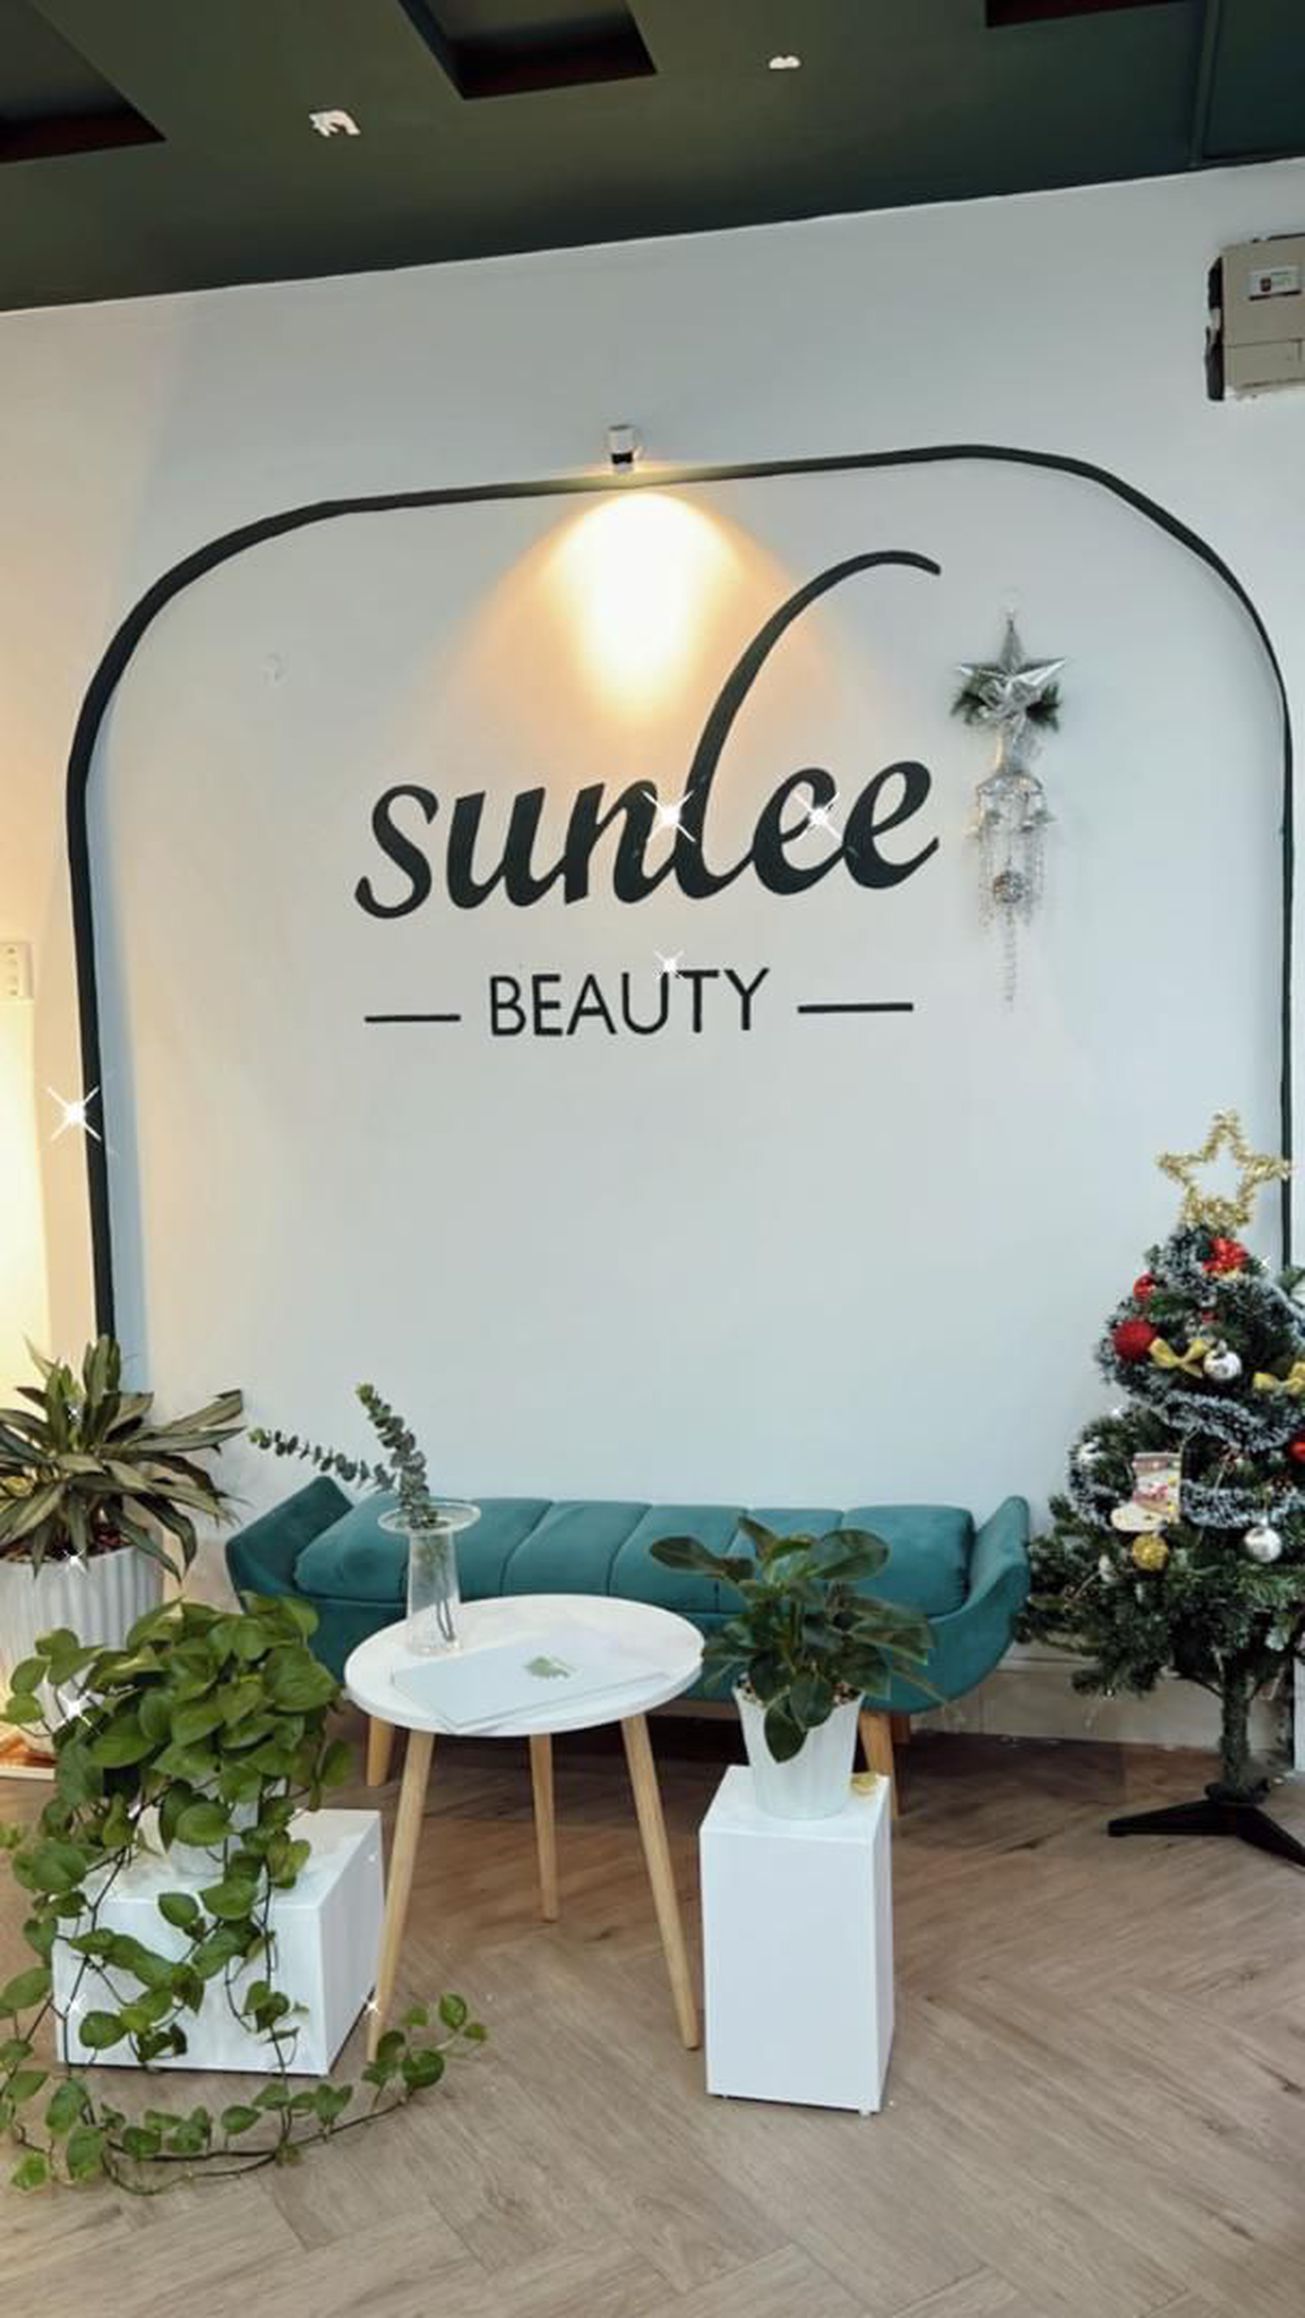 Sunlee Beauty Phú Nhuận 1 gallaries